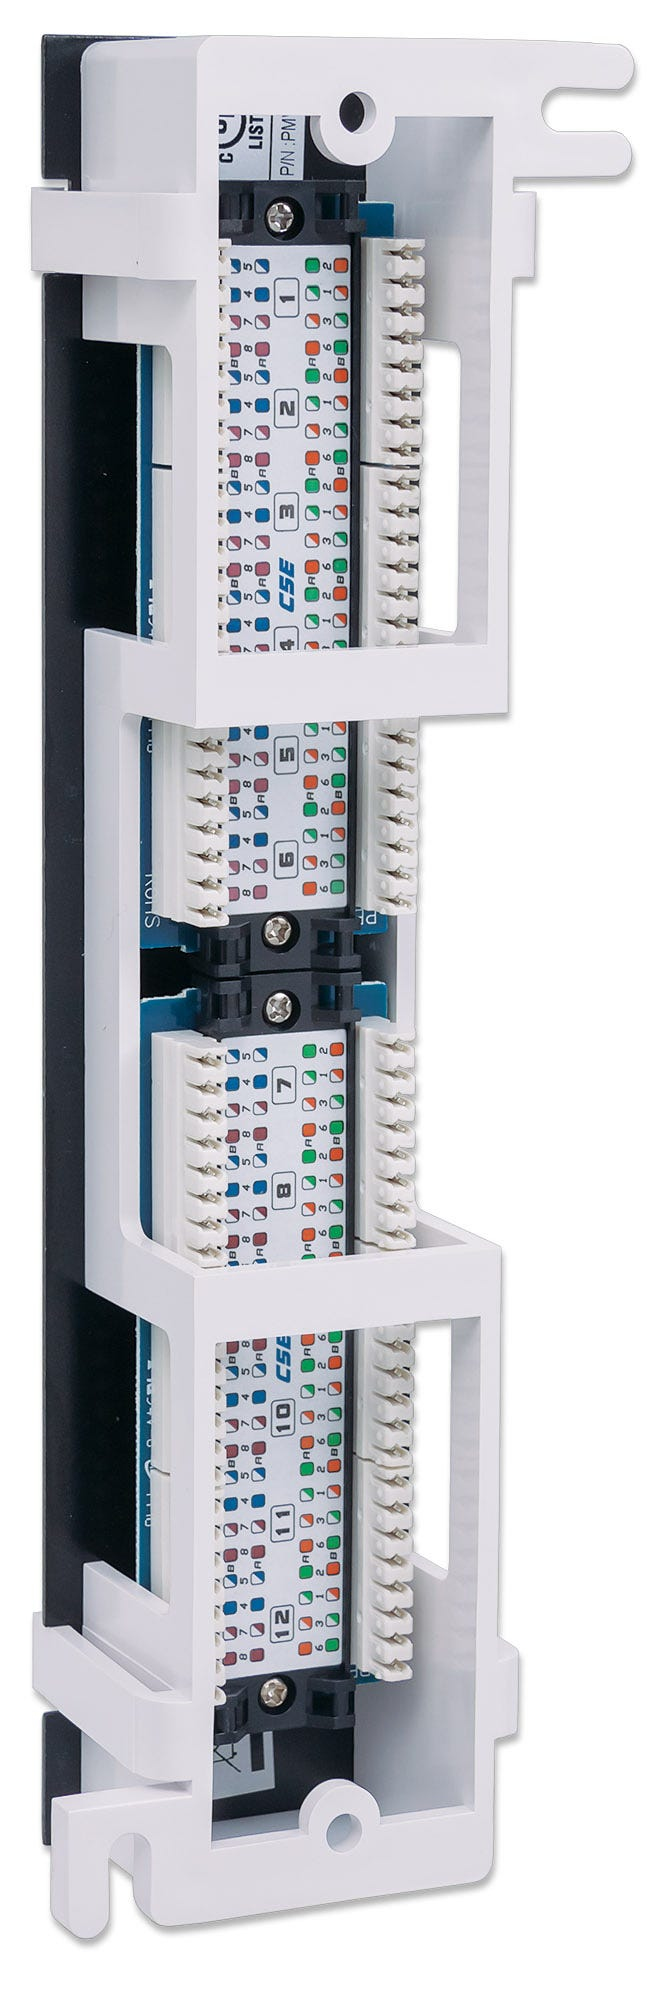 Intellinet Patch Panel, Cat5e, Wall-mount, UTP, 12-Port, Black